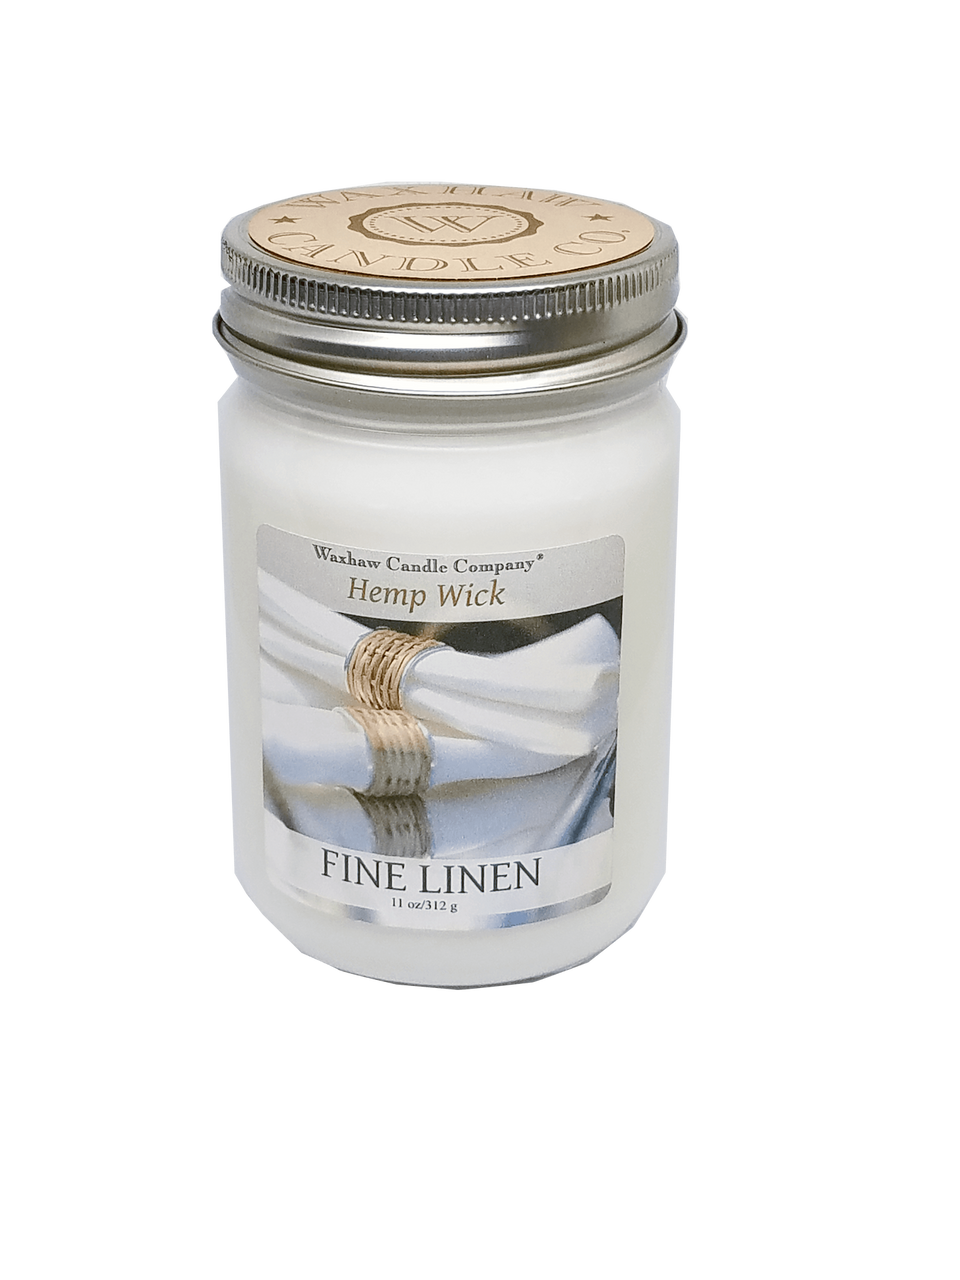 Fresh Linen Candle